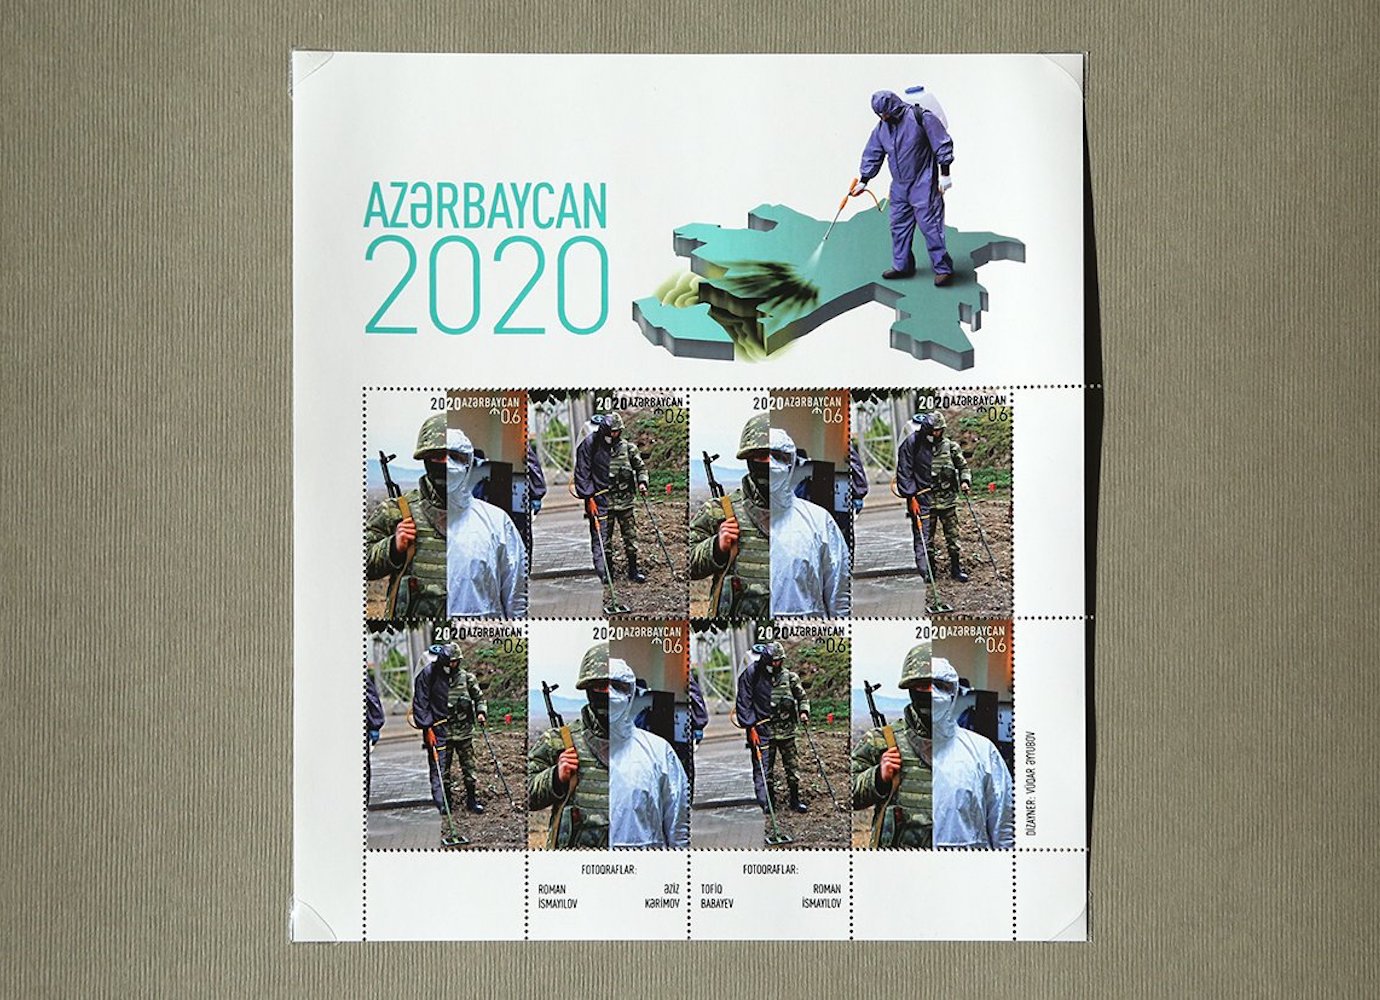 Azerbaijani postal stamps accused of spreading anti-Armenian propaganda